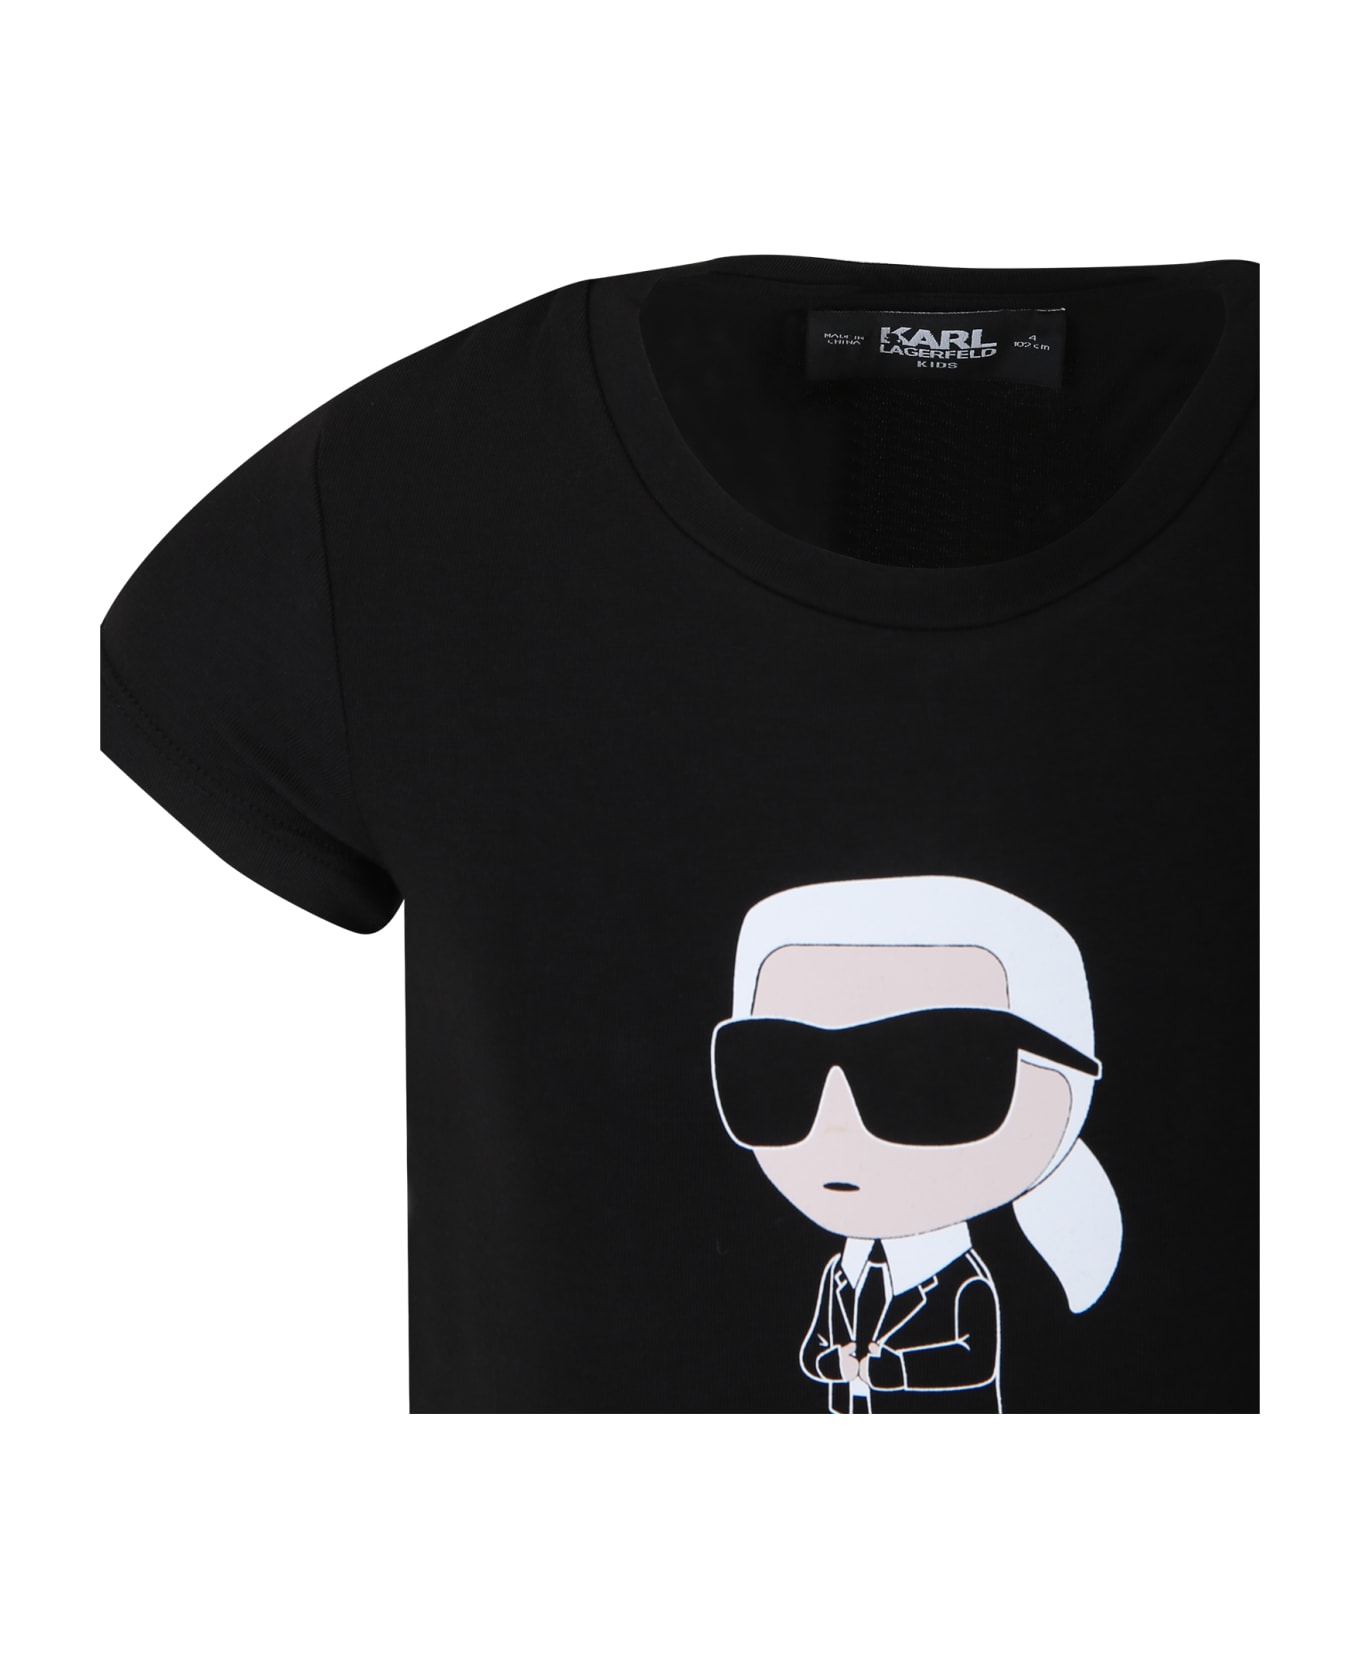 Karl Lagerfeld Kids Black T-shirt For Girl With Karl Lagerfeld Print And Logo - Black